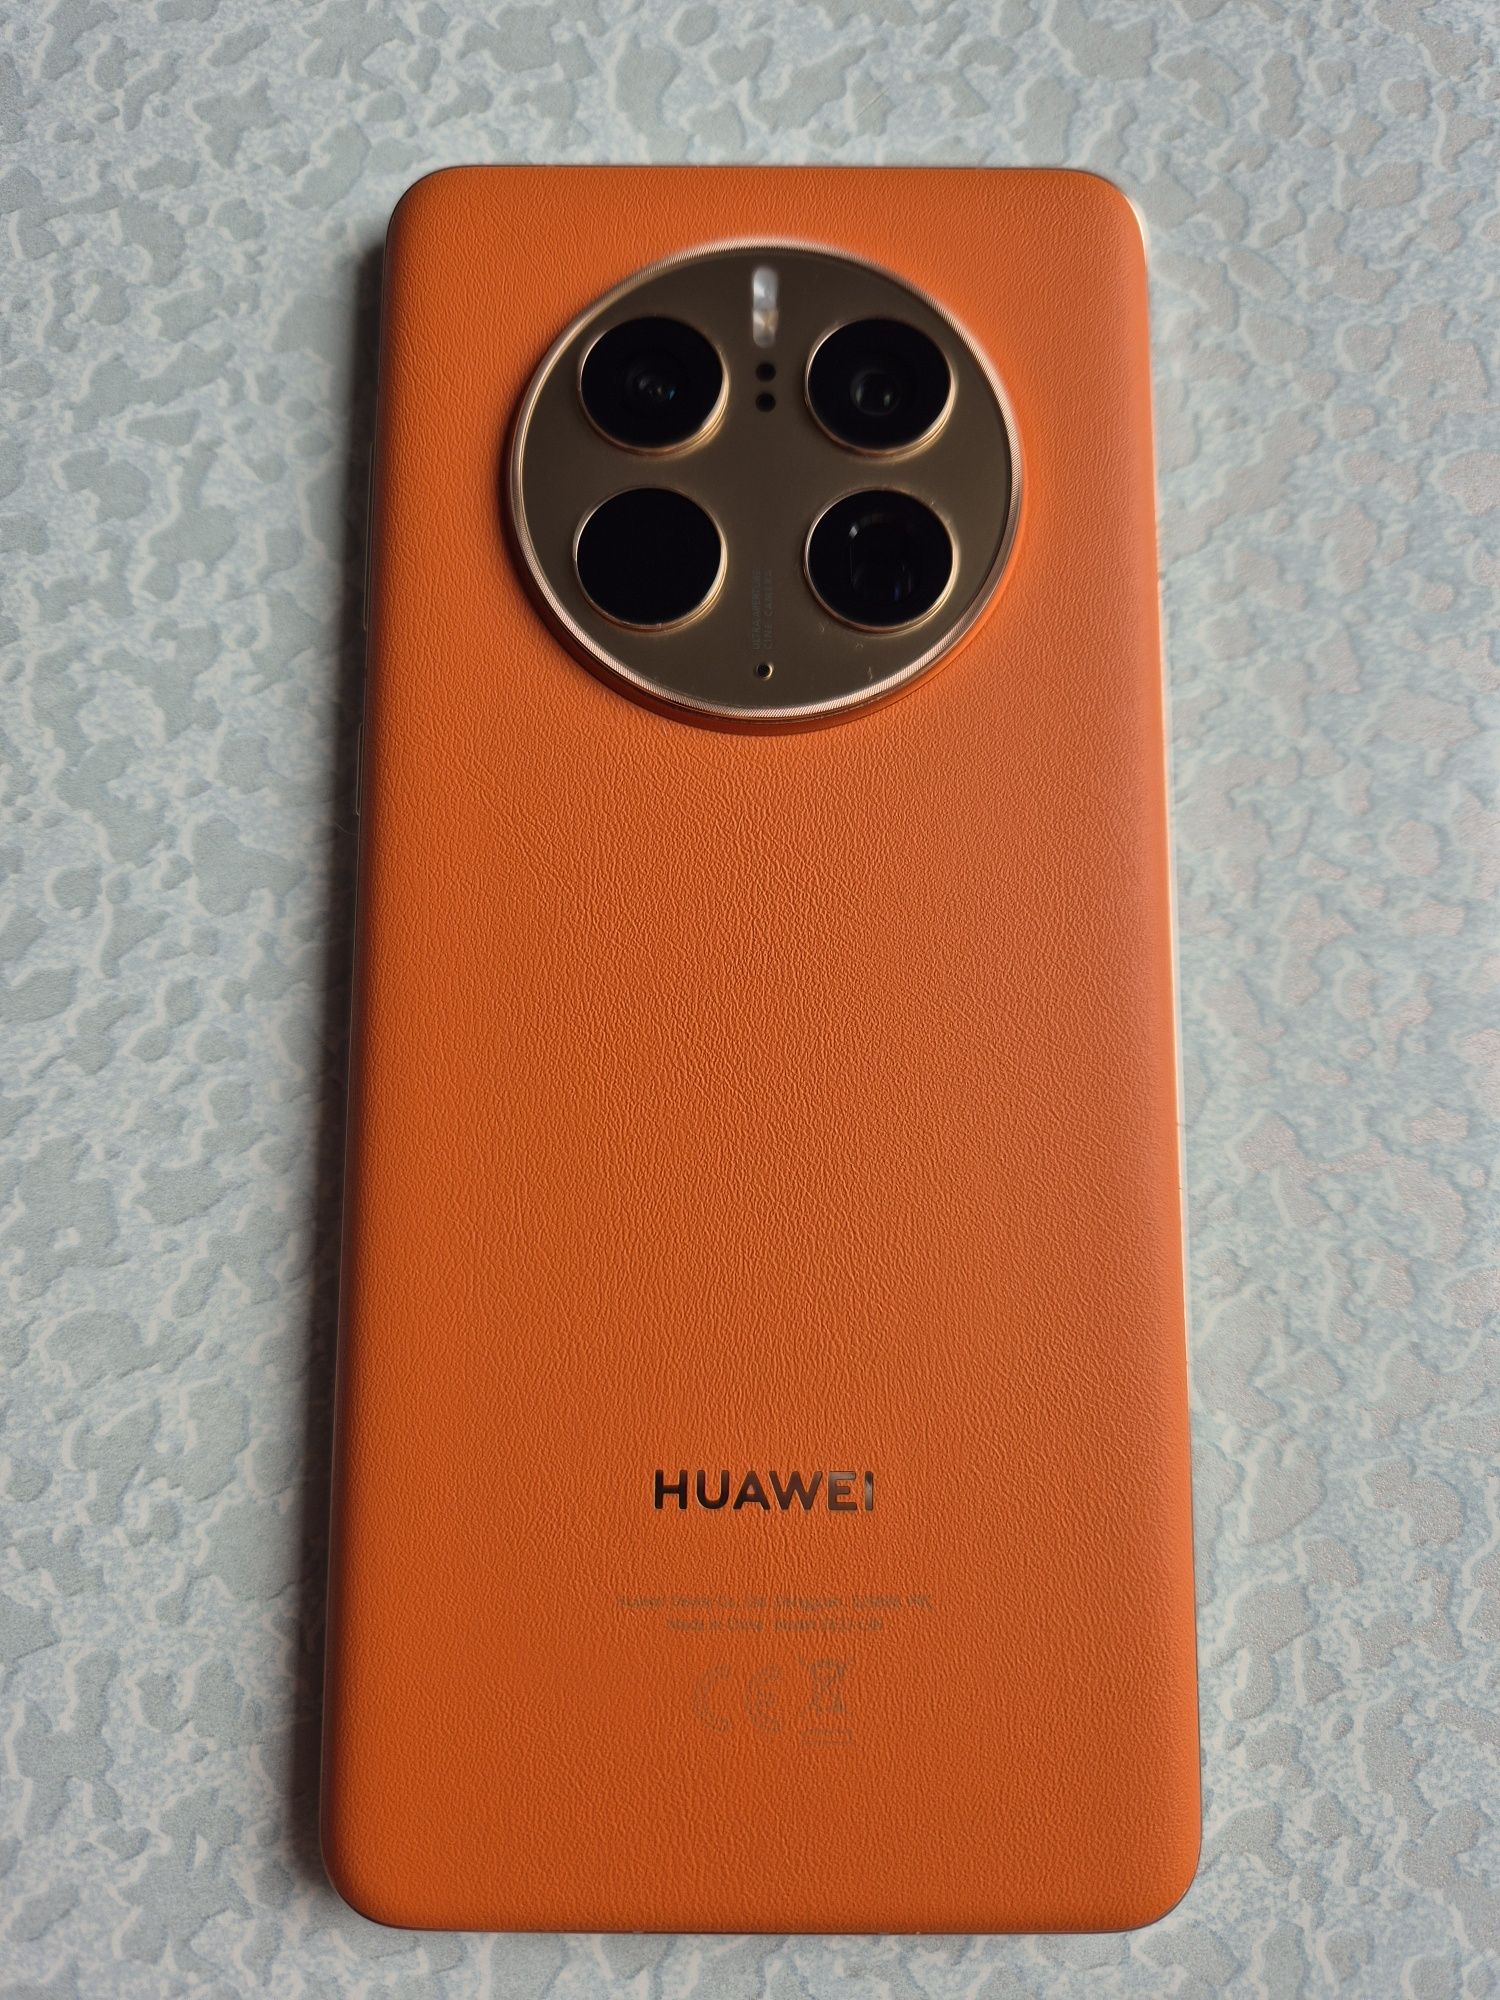 Huawei mate 50 pro 512gb + watch gt 3 pro